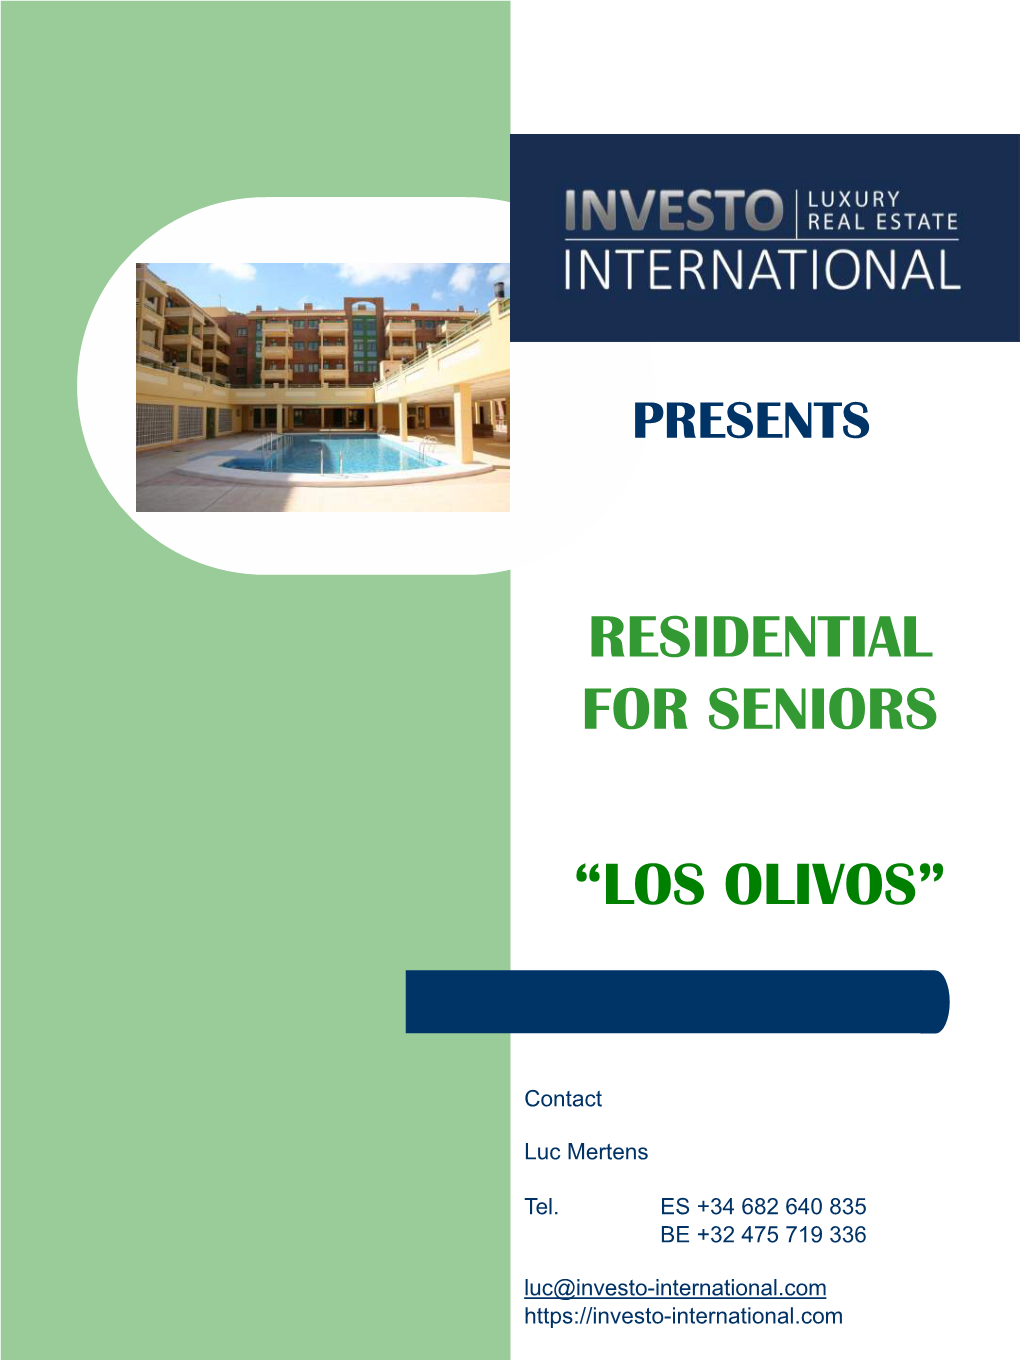 Residential for Seniors “Los Olivos”